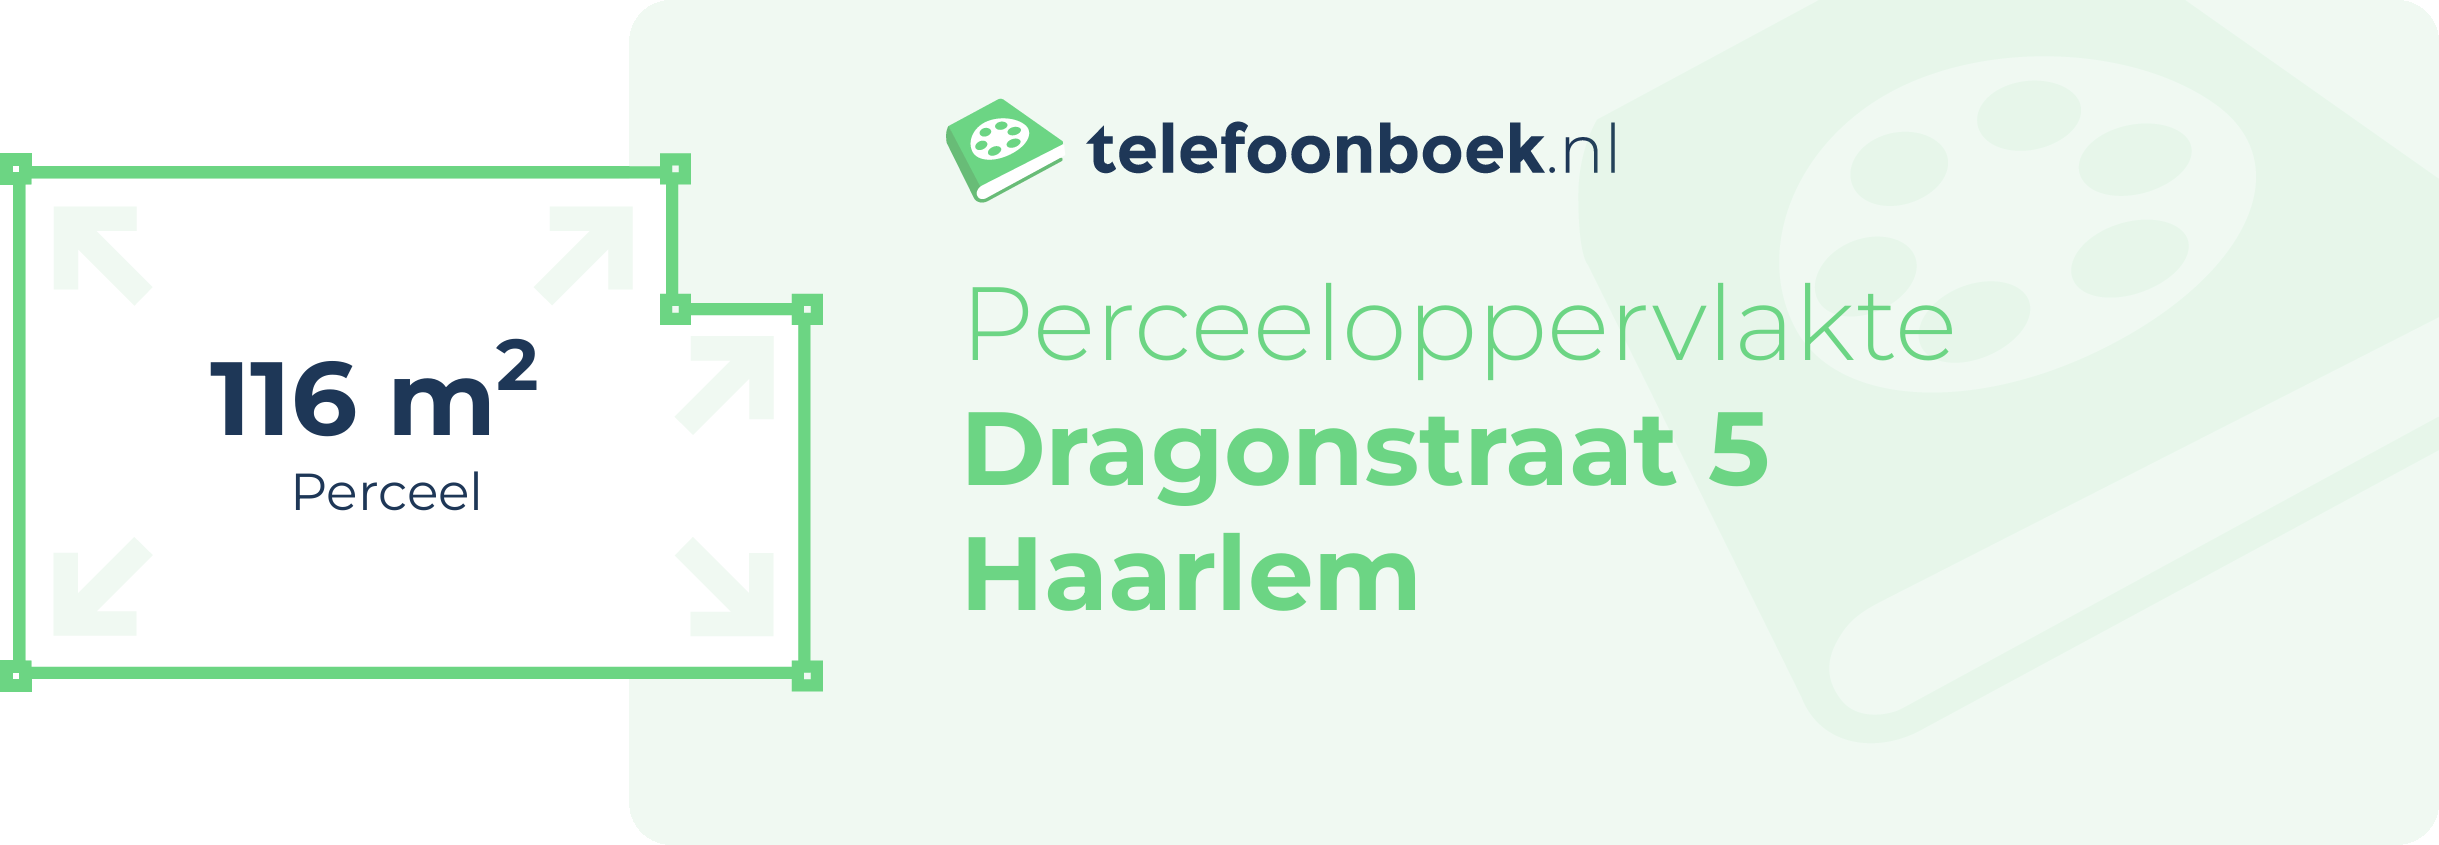 Perceeloppervlakte Dragonstraat 5 Haarlem